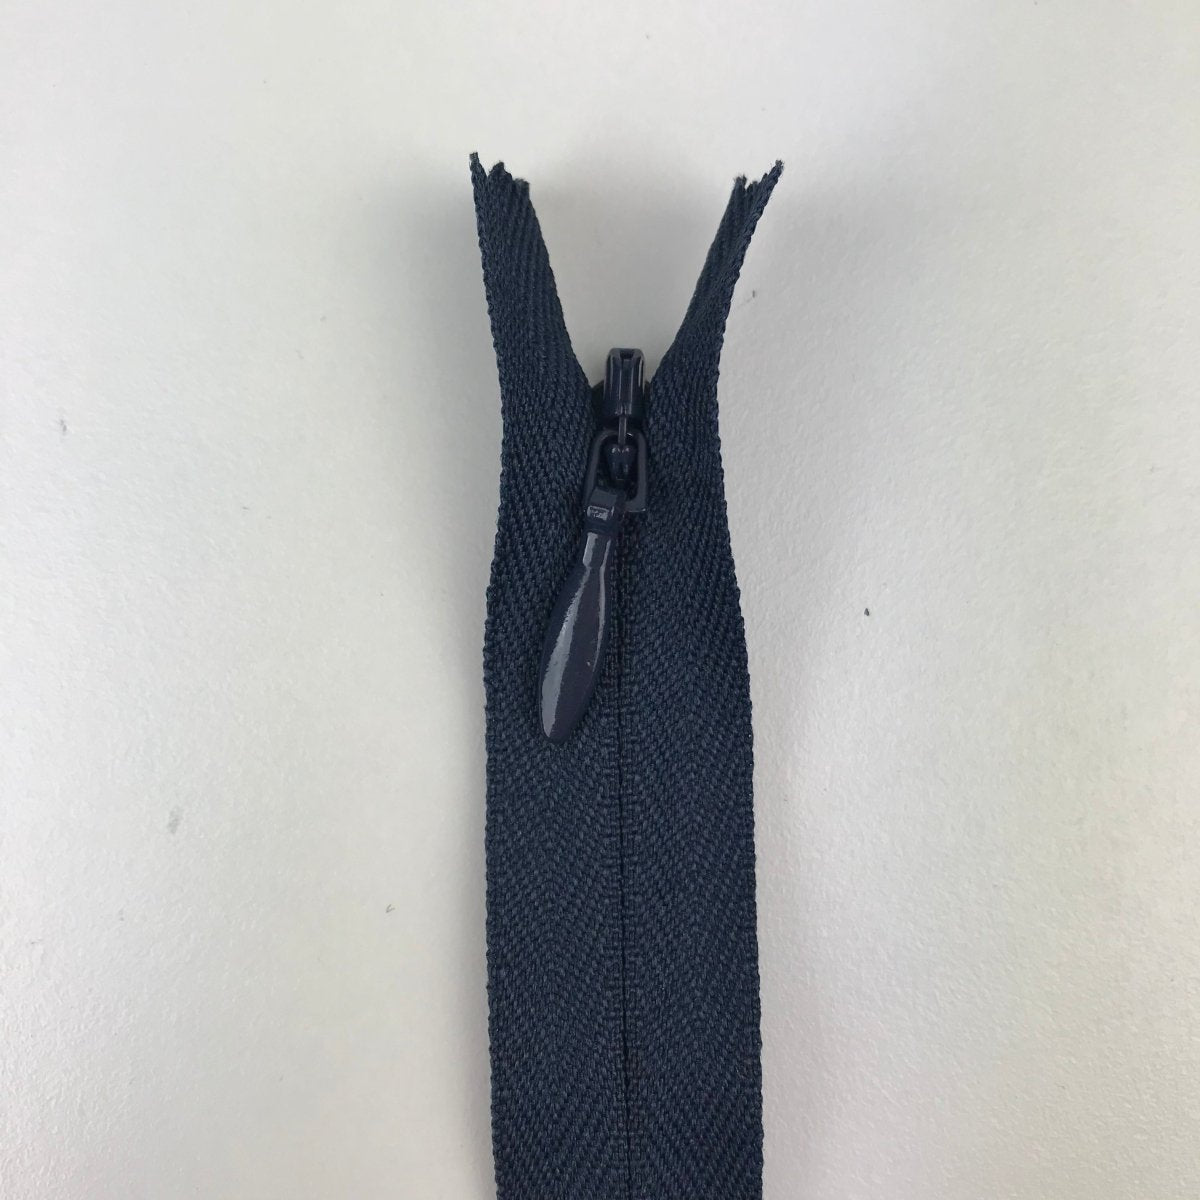 YKK Zipper - Invisible - 58.5cm (23") - Sewing Gem